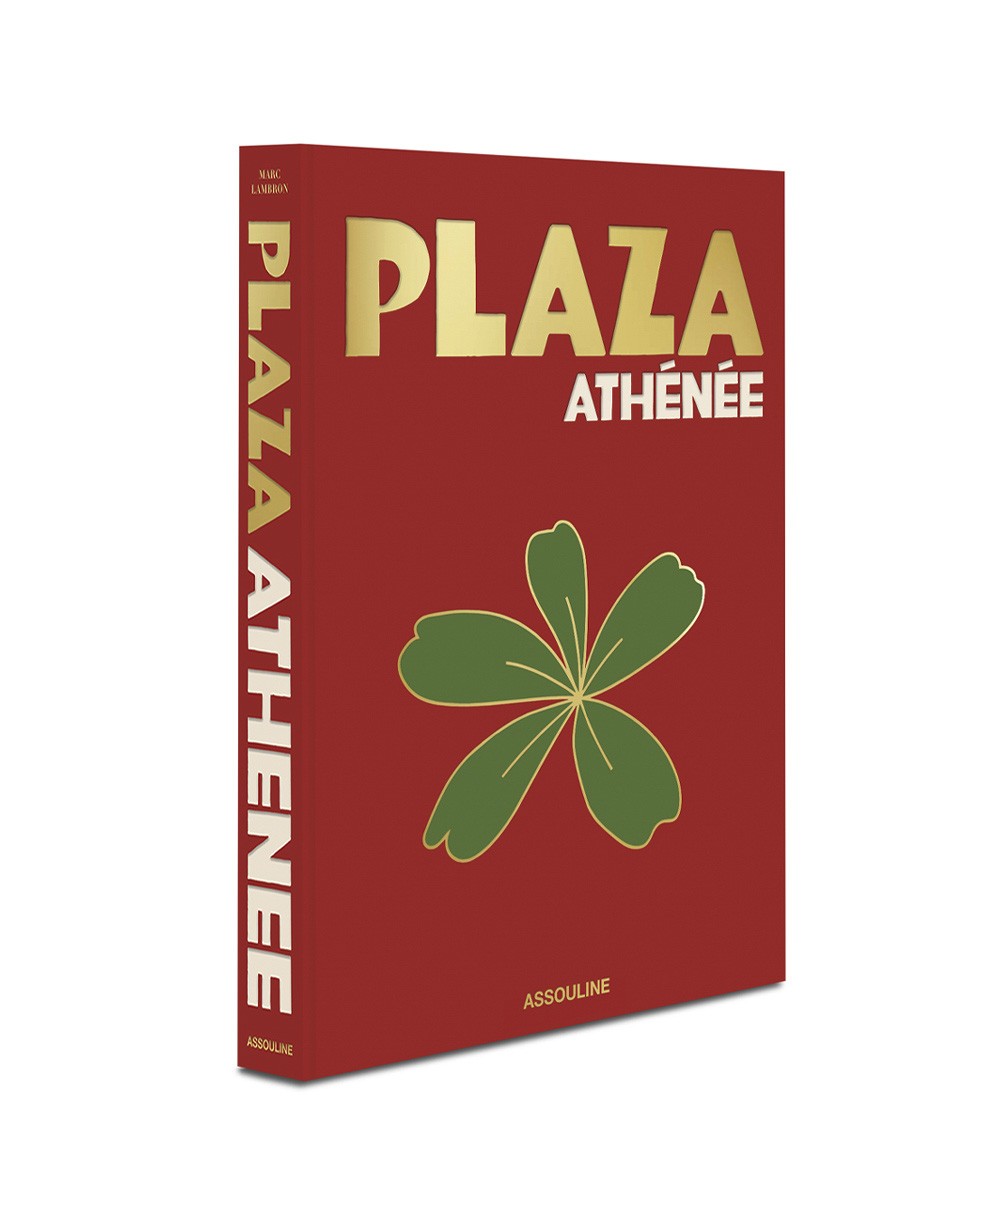 Cover des Bildbands „Plaza Athénée“ von Assouline im RAUM concept store 